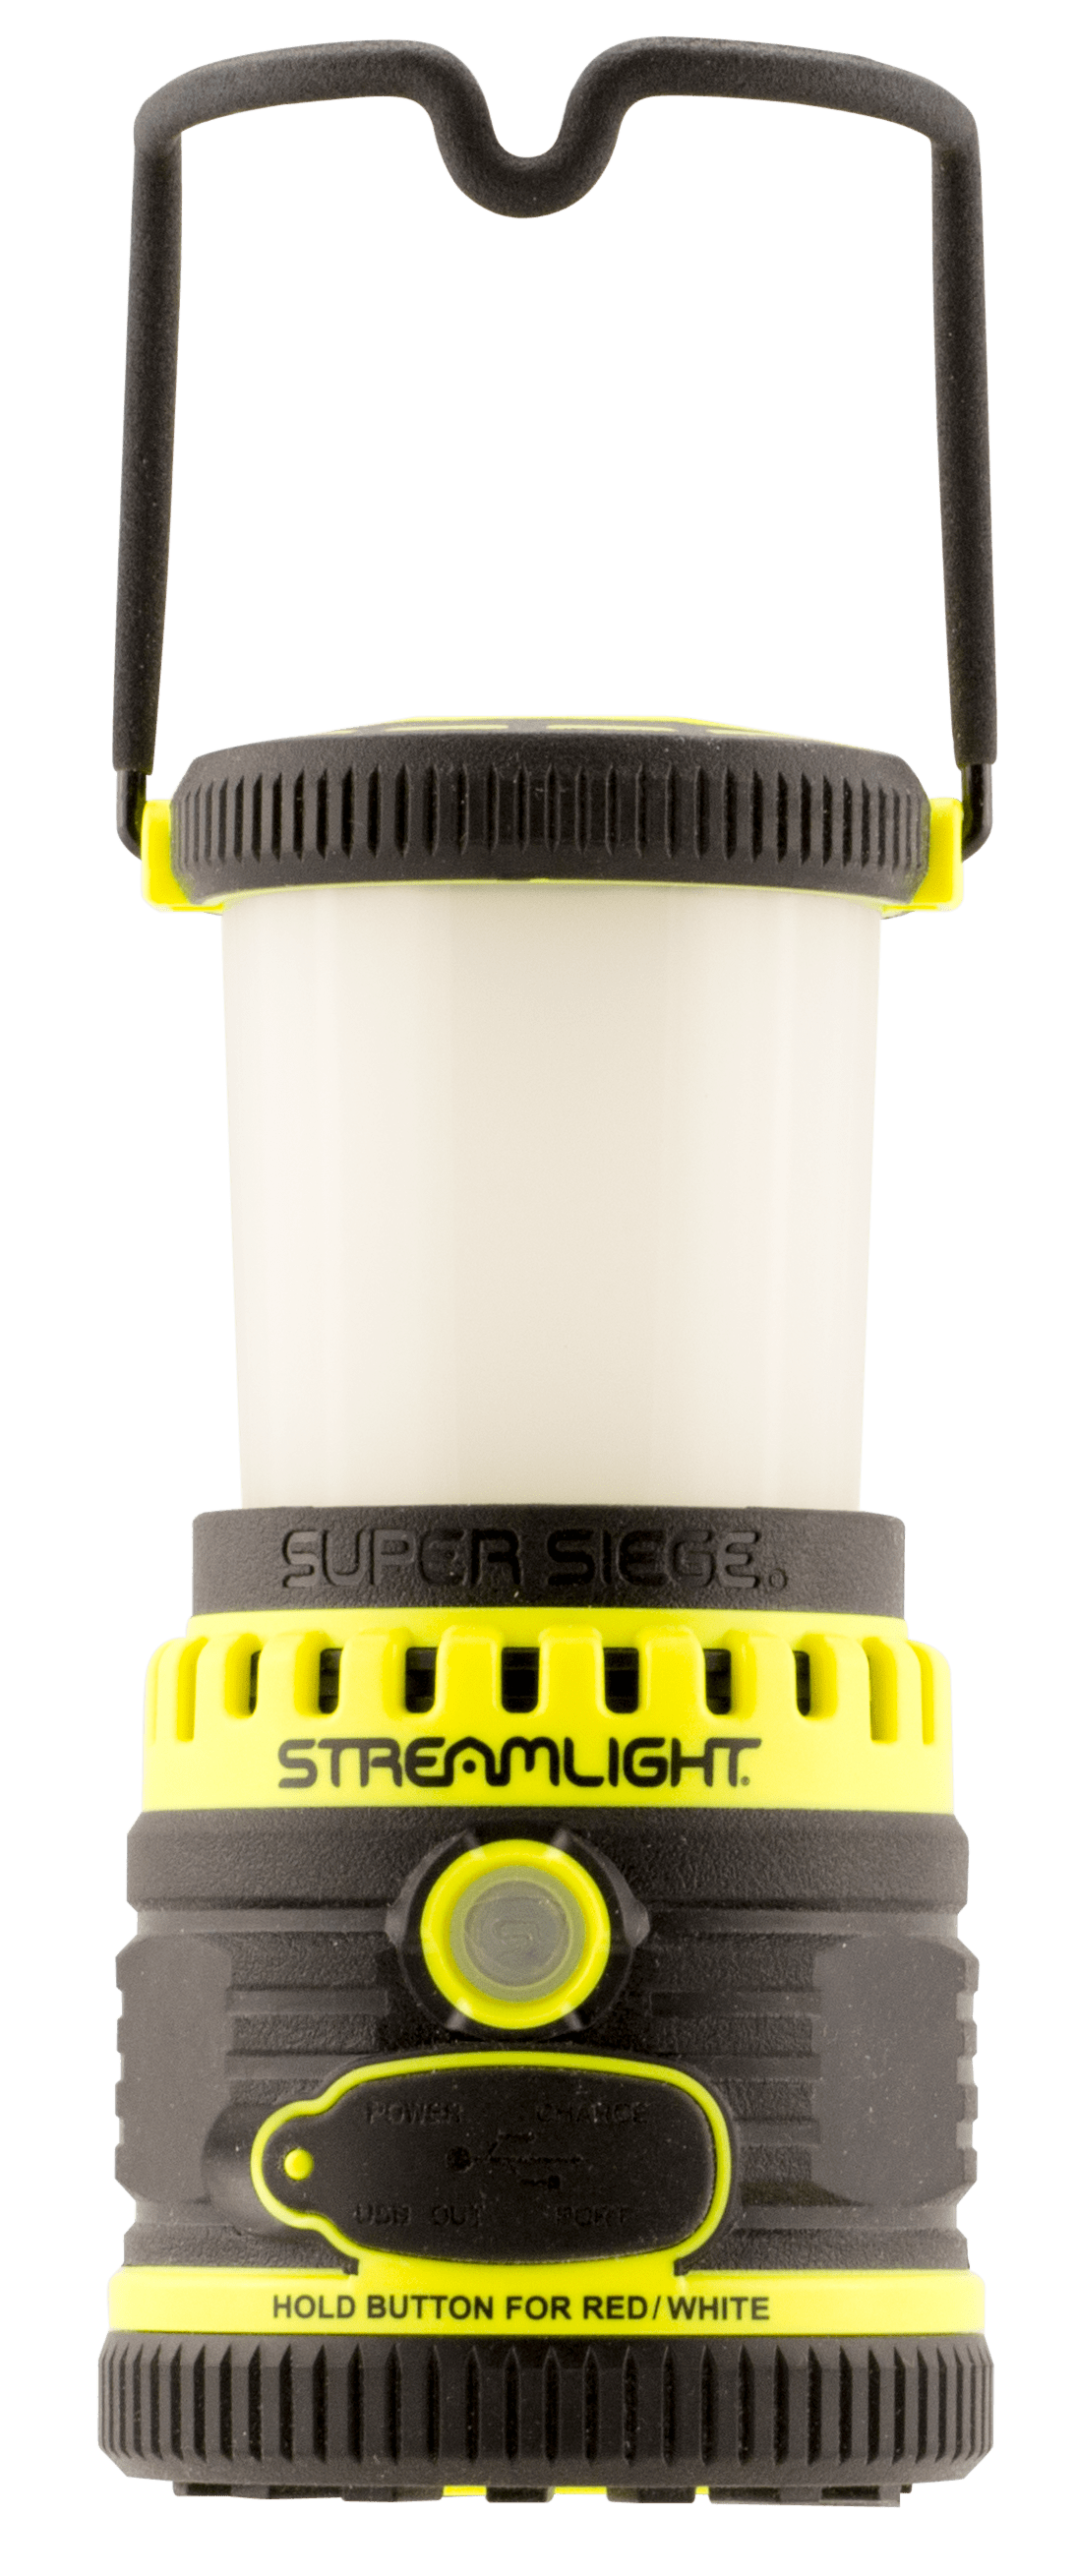 Streamlight Streamlight Super Siege, Stl 44945  Super Siege Yellow Accessories